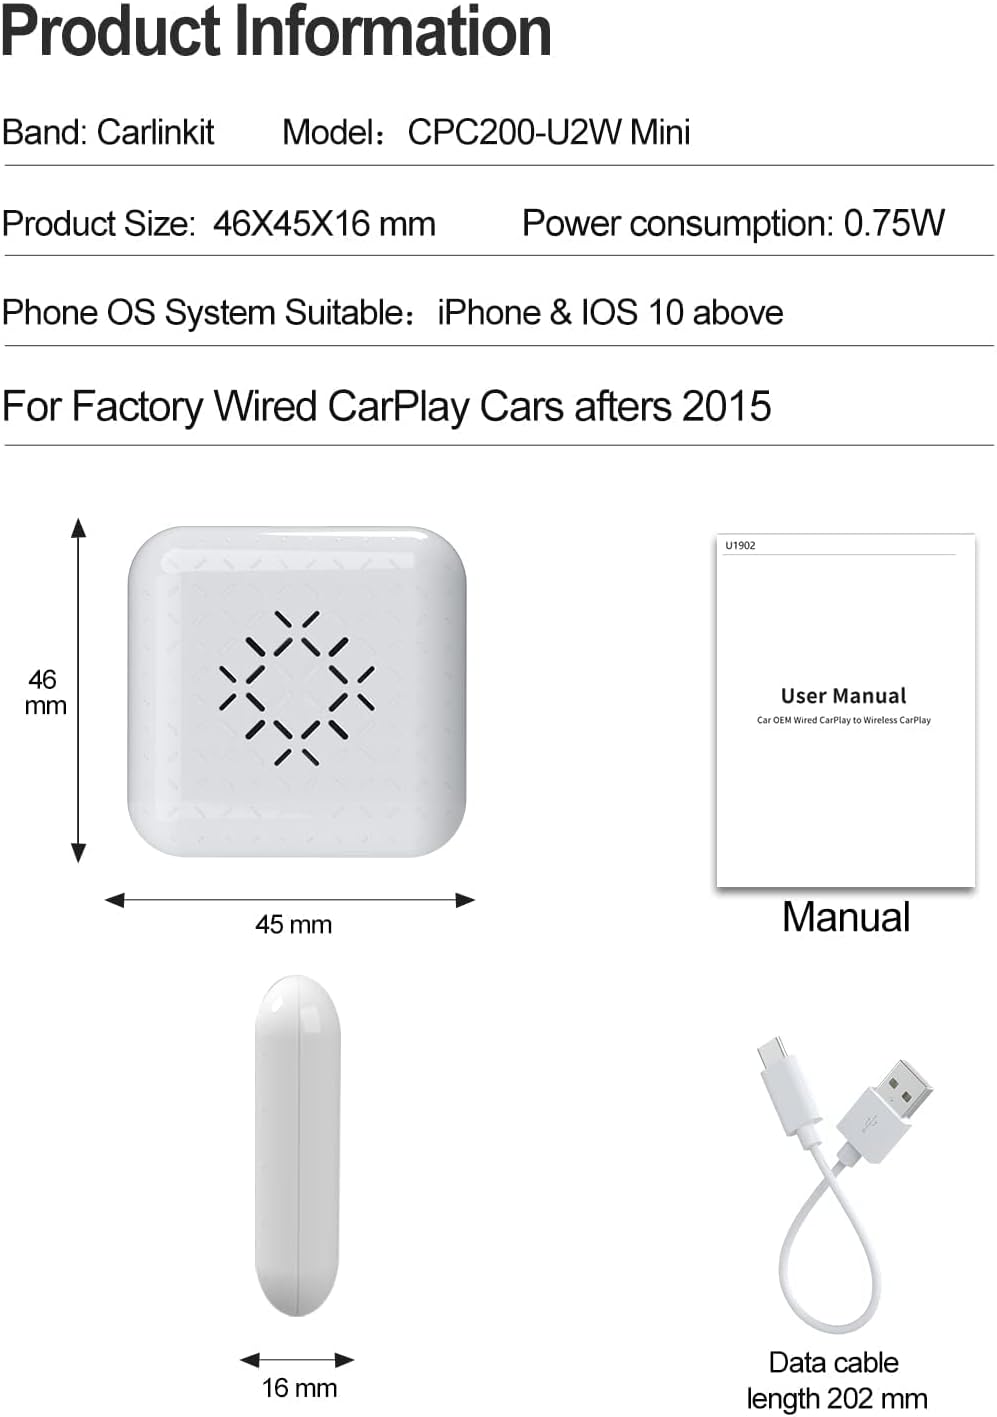 Carlinkit 3.0 MINI Wireless CarPlay Box Bluetooth Auto for Original car wired to wireless CarPlay Support 98% of Car models